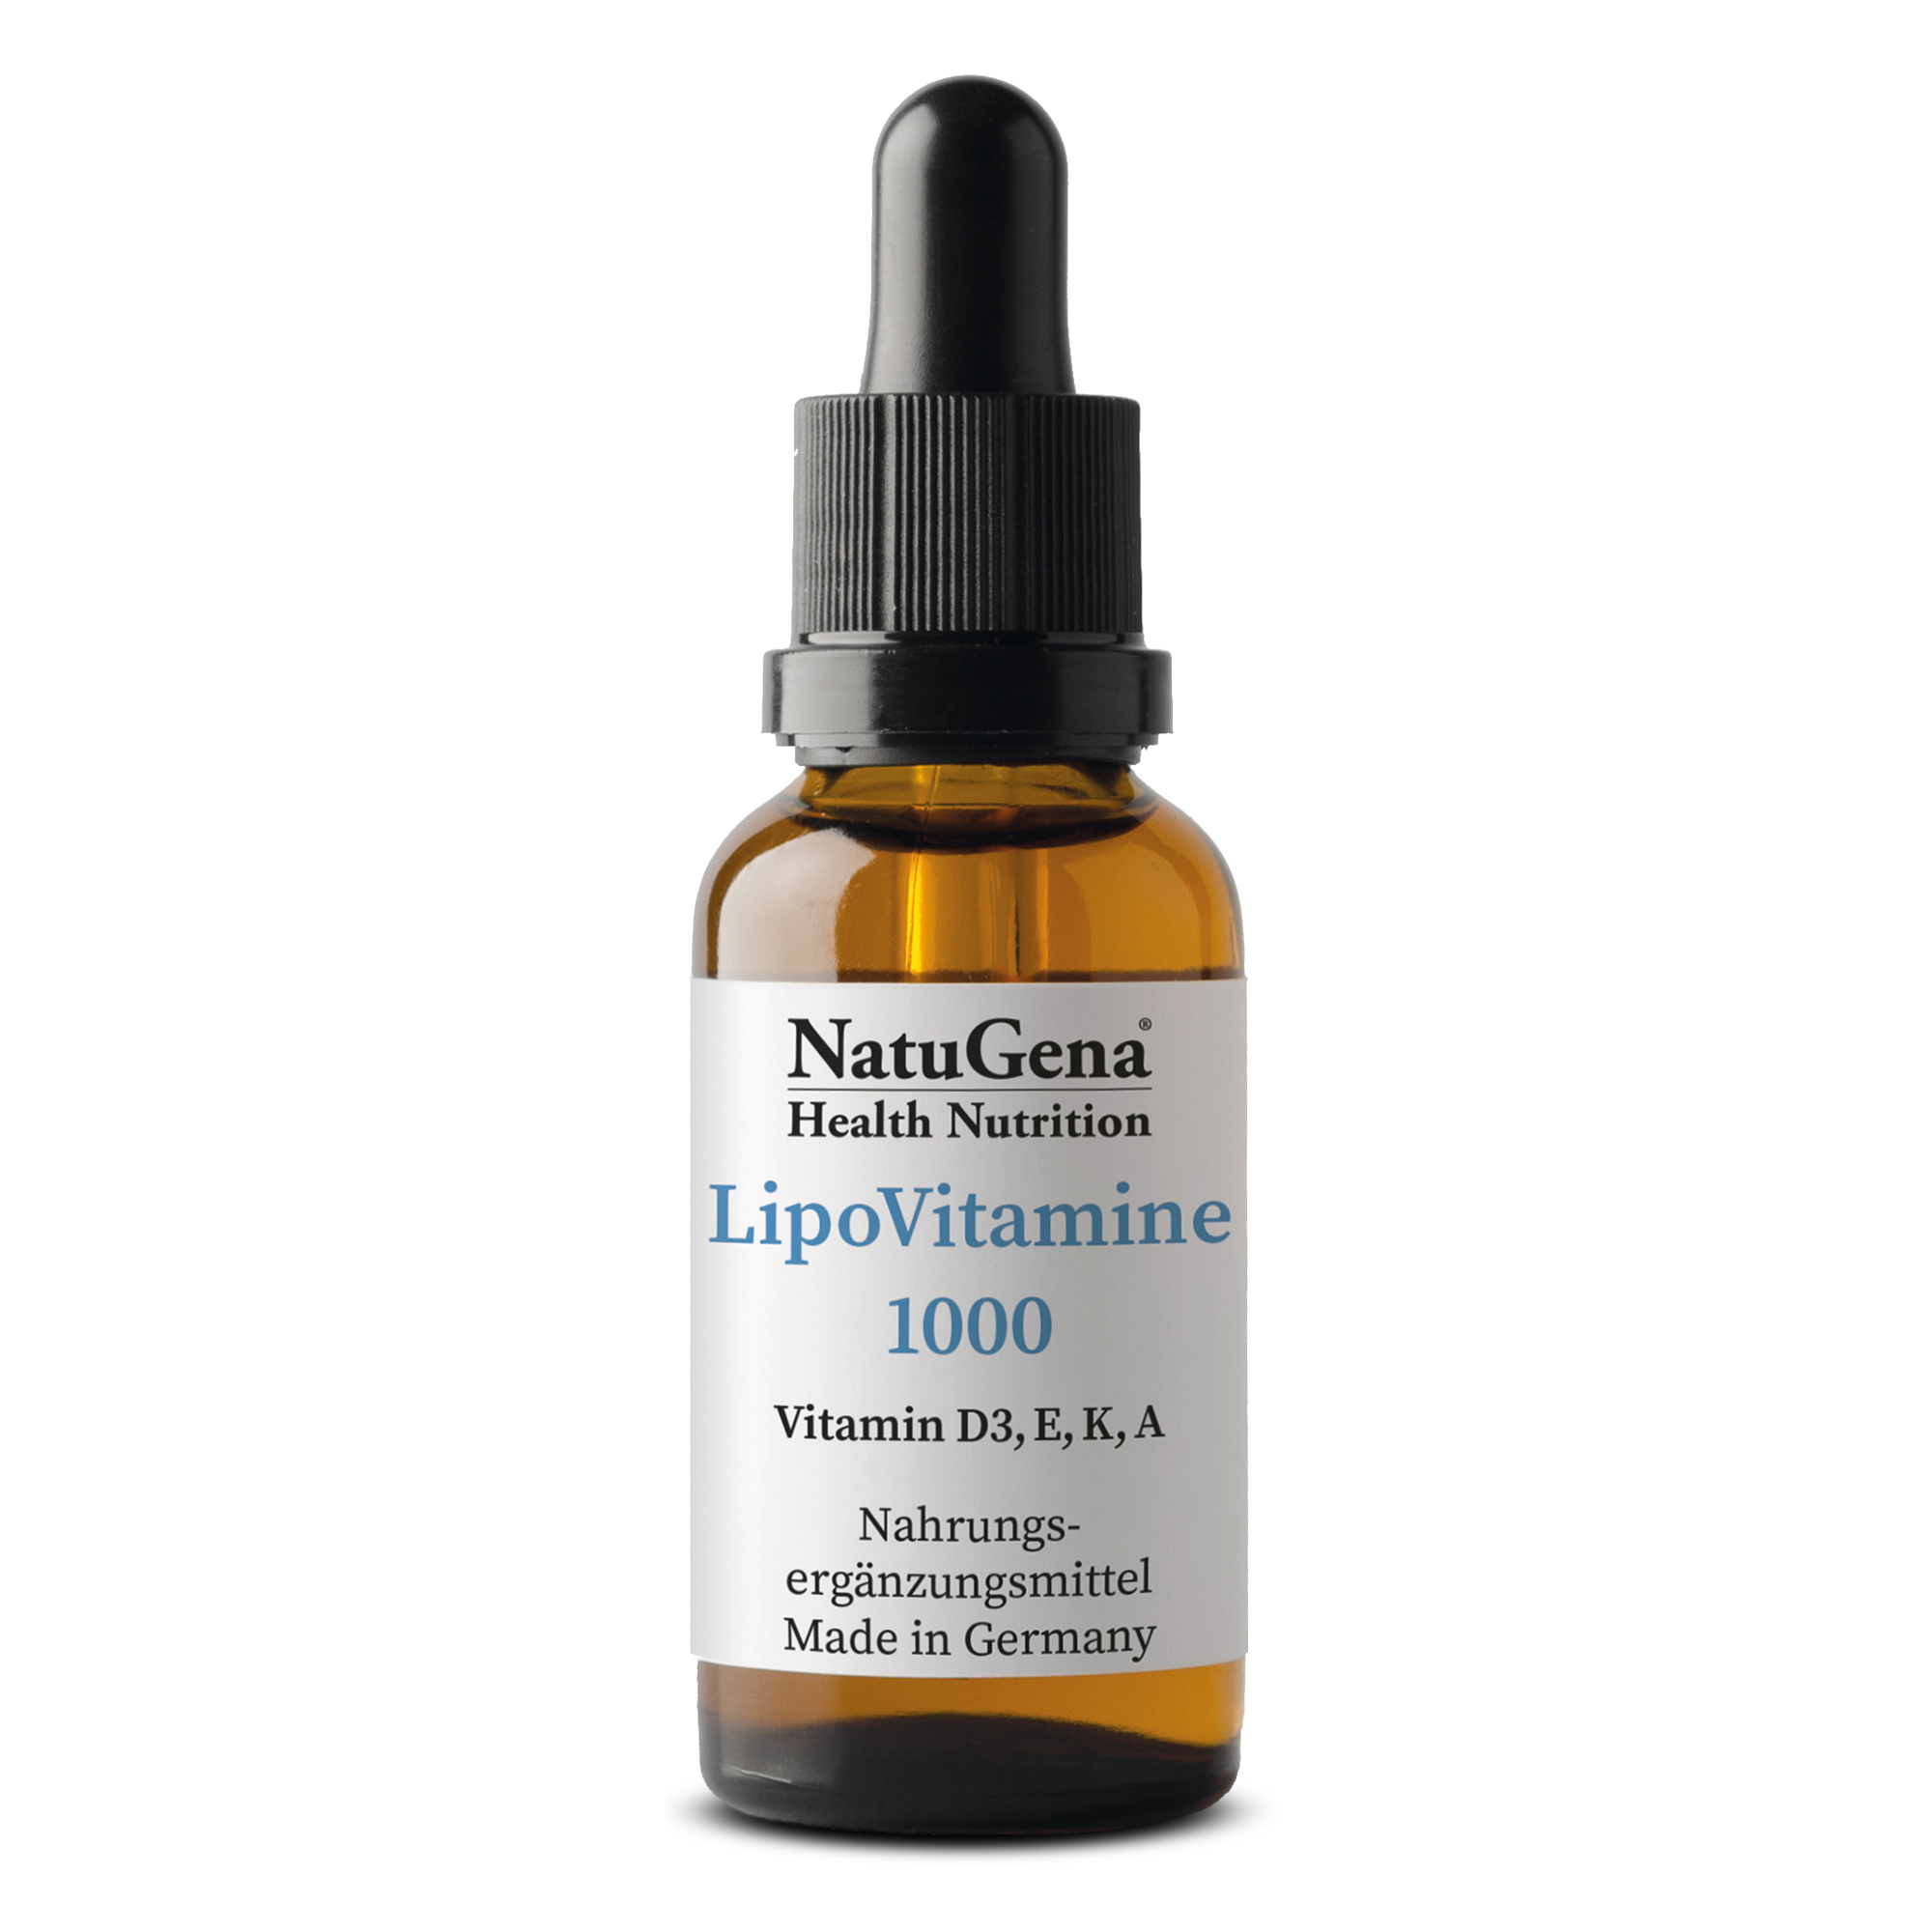 NatuGena LipoVitamine 1000 | 15ml | Optimiert mit Vitamin D3, E, K2, A | Für Immunsystem, Knochenstärke & Sehkraft | mit MCT-Öl